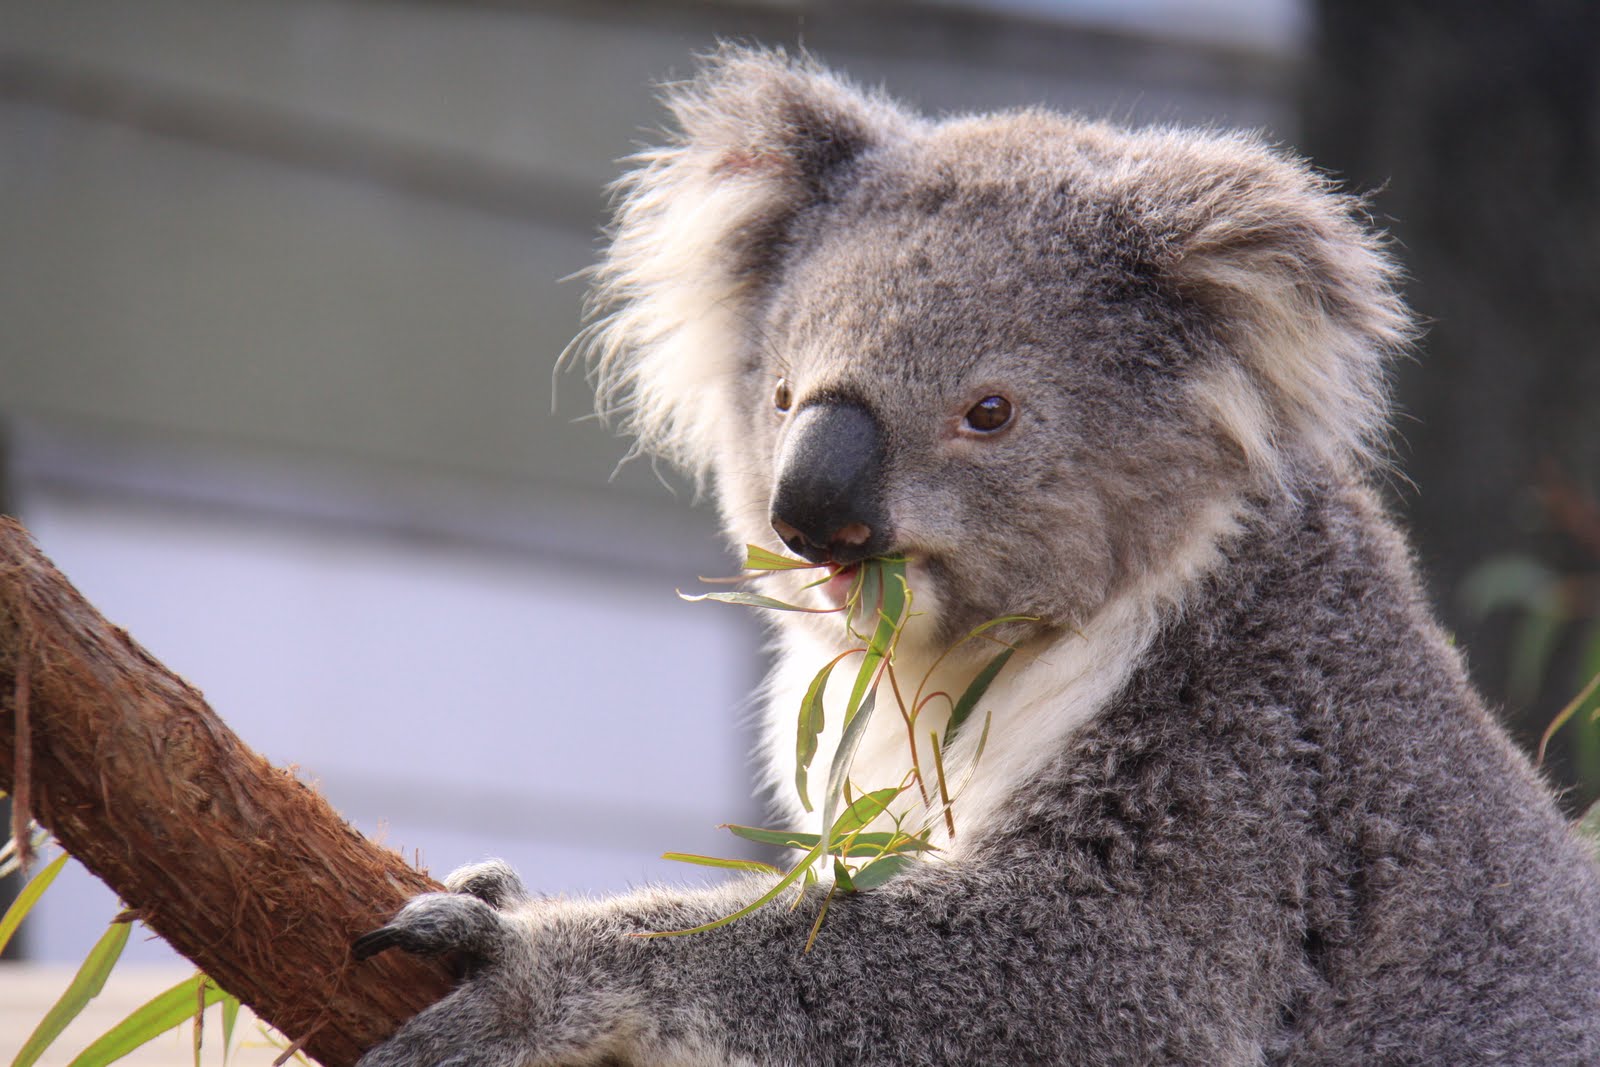 Koala Bear, photograph by Donald Shearman